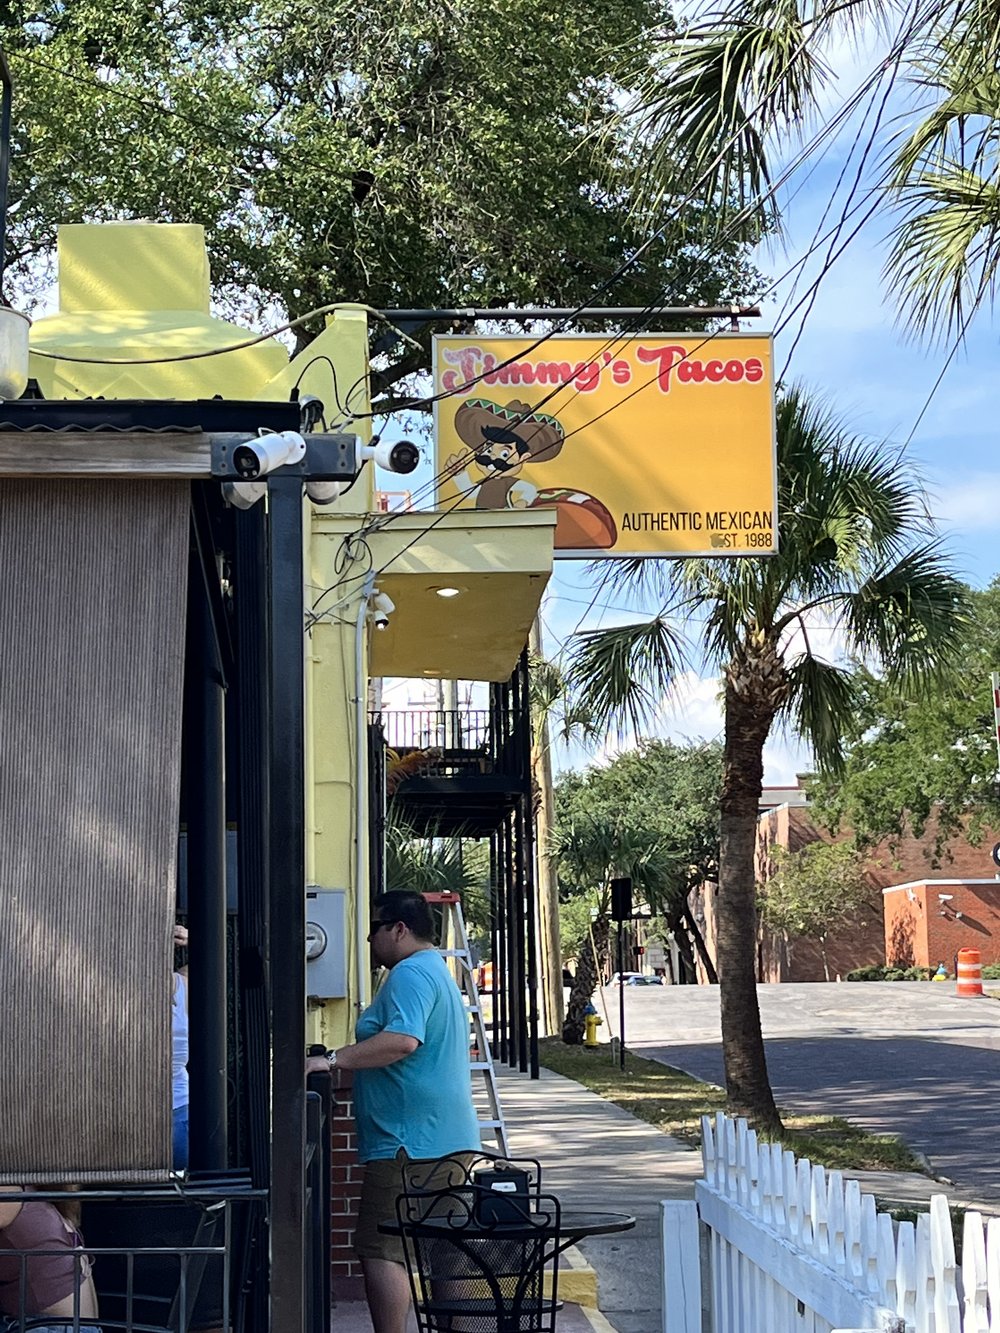 Jimmy's Tacos sign Ybor Tampa Florida.jpg